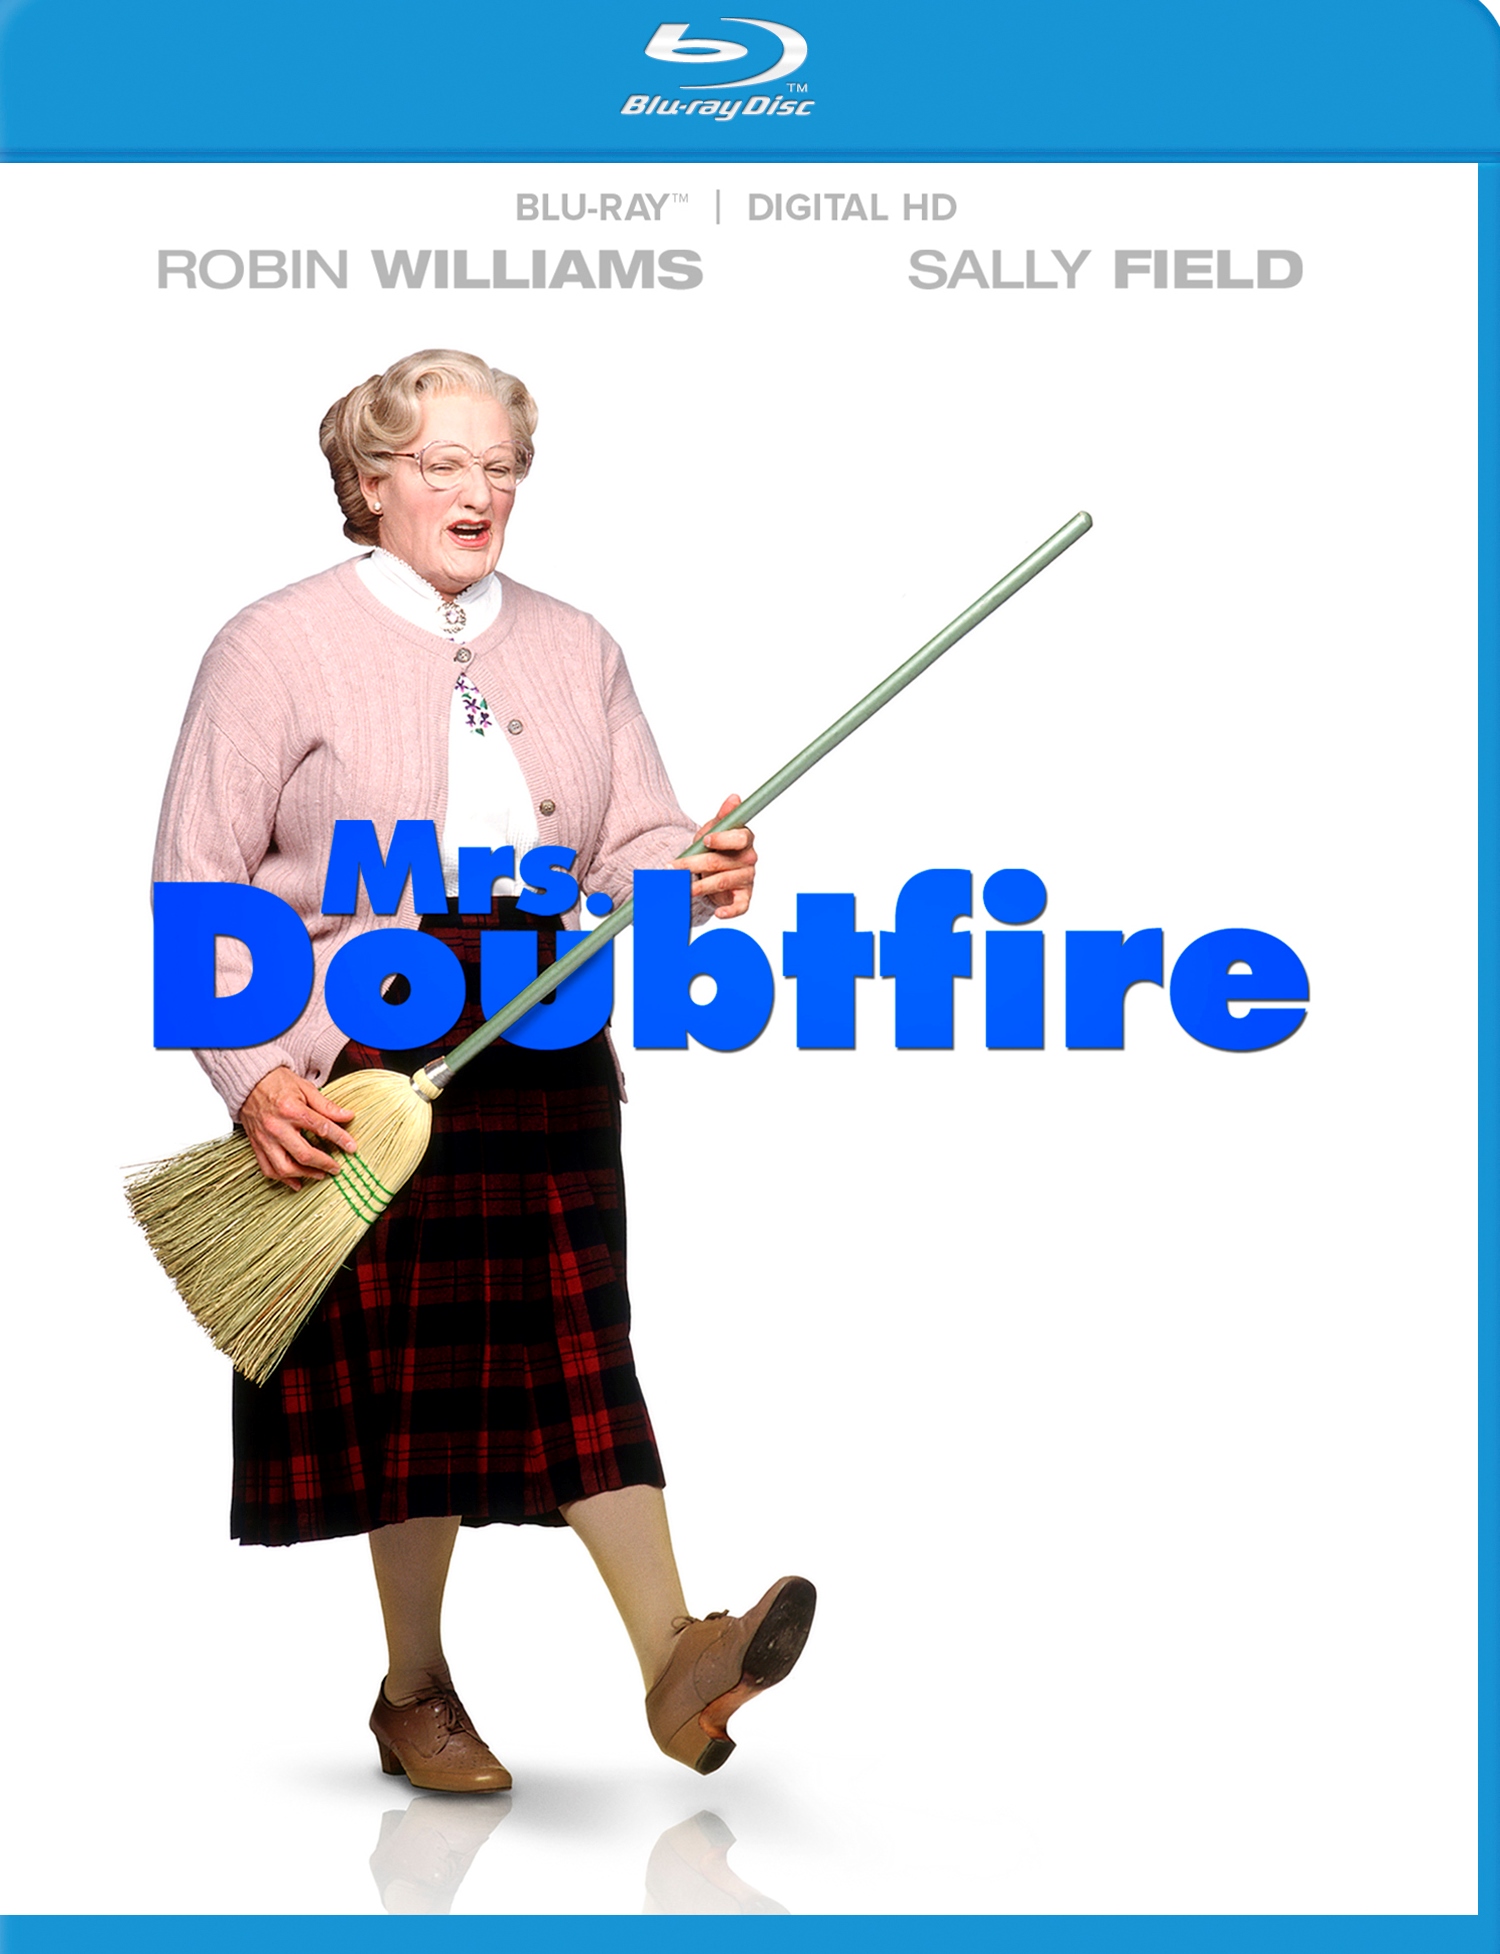 Mrs. Doubtfire [Blu-ray] [1993]